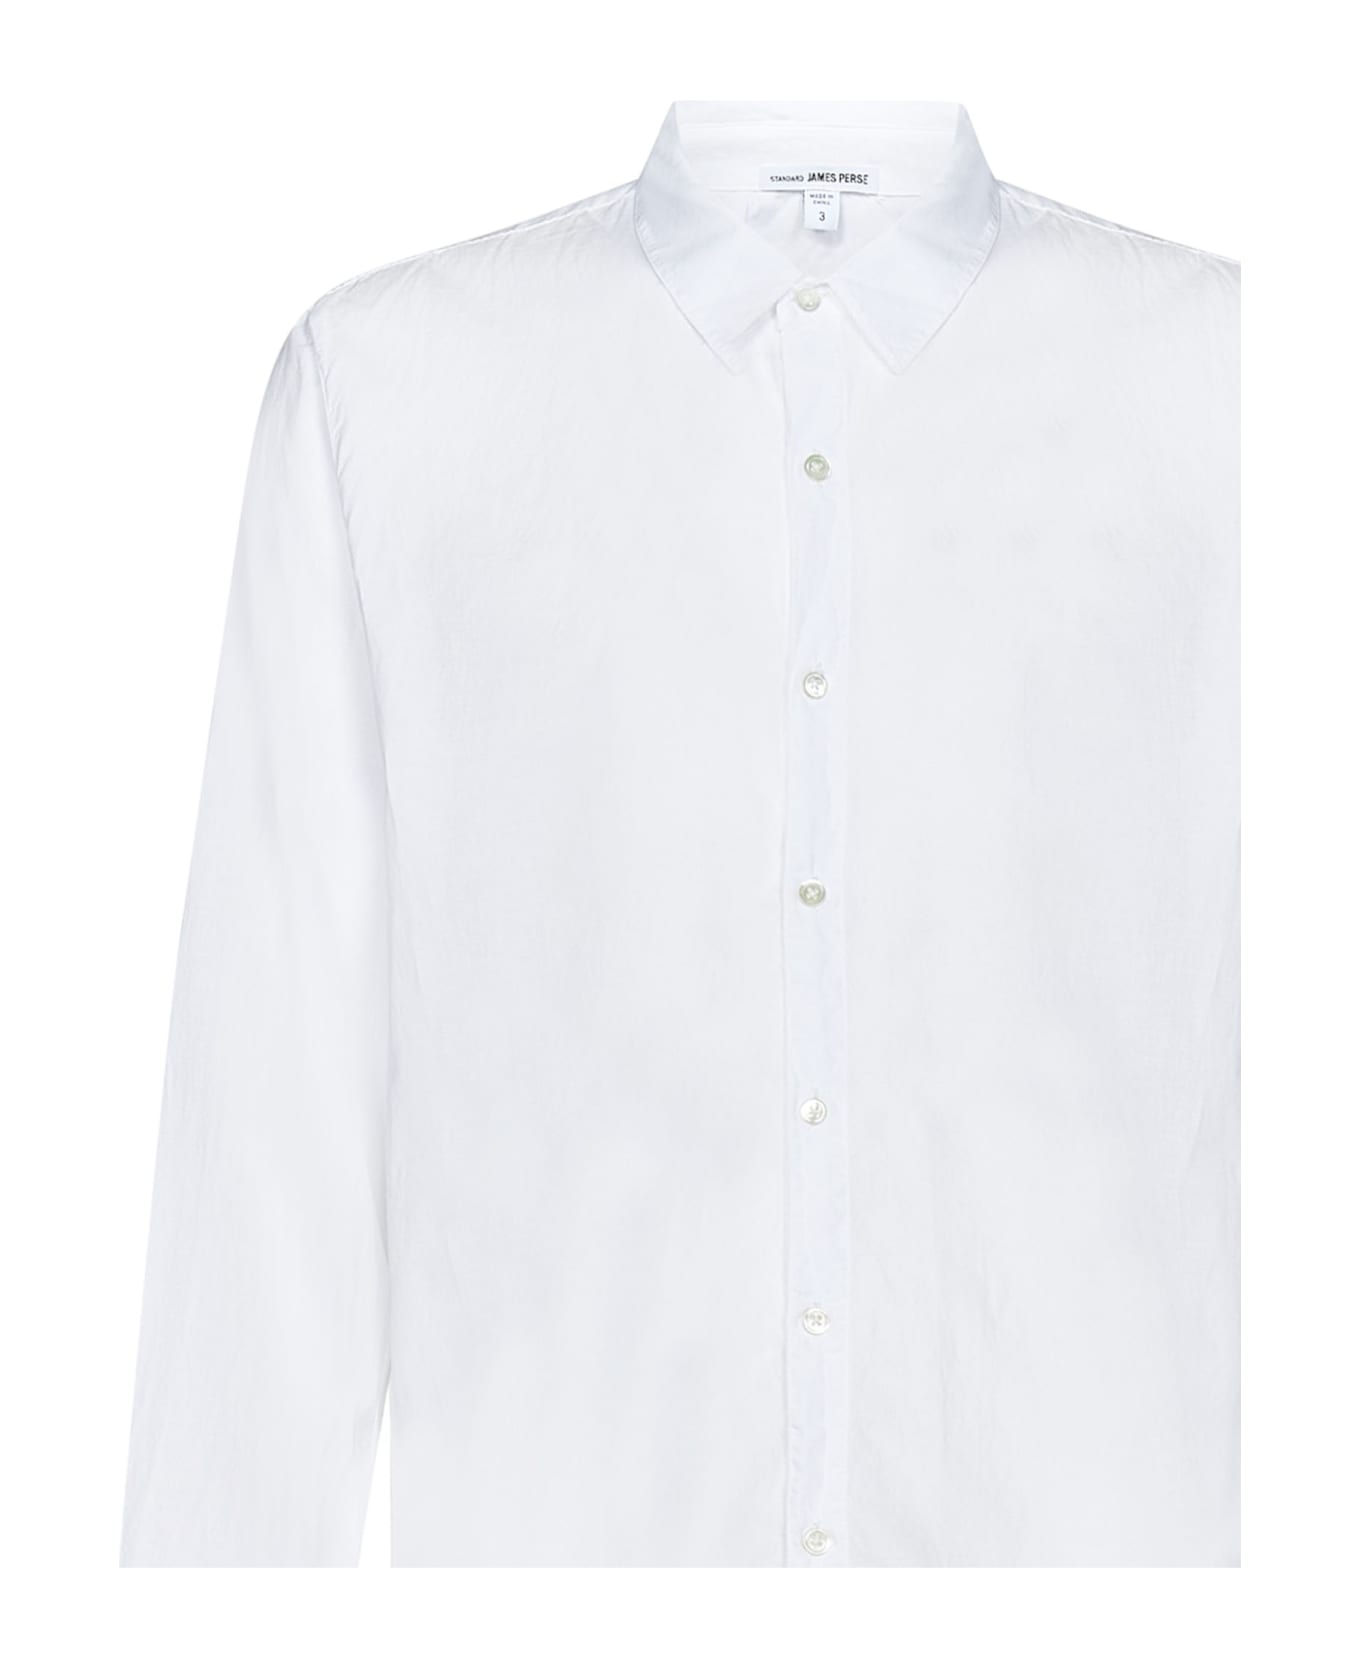 James Perse Shirt - White